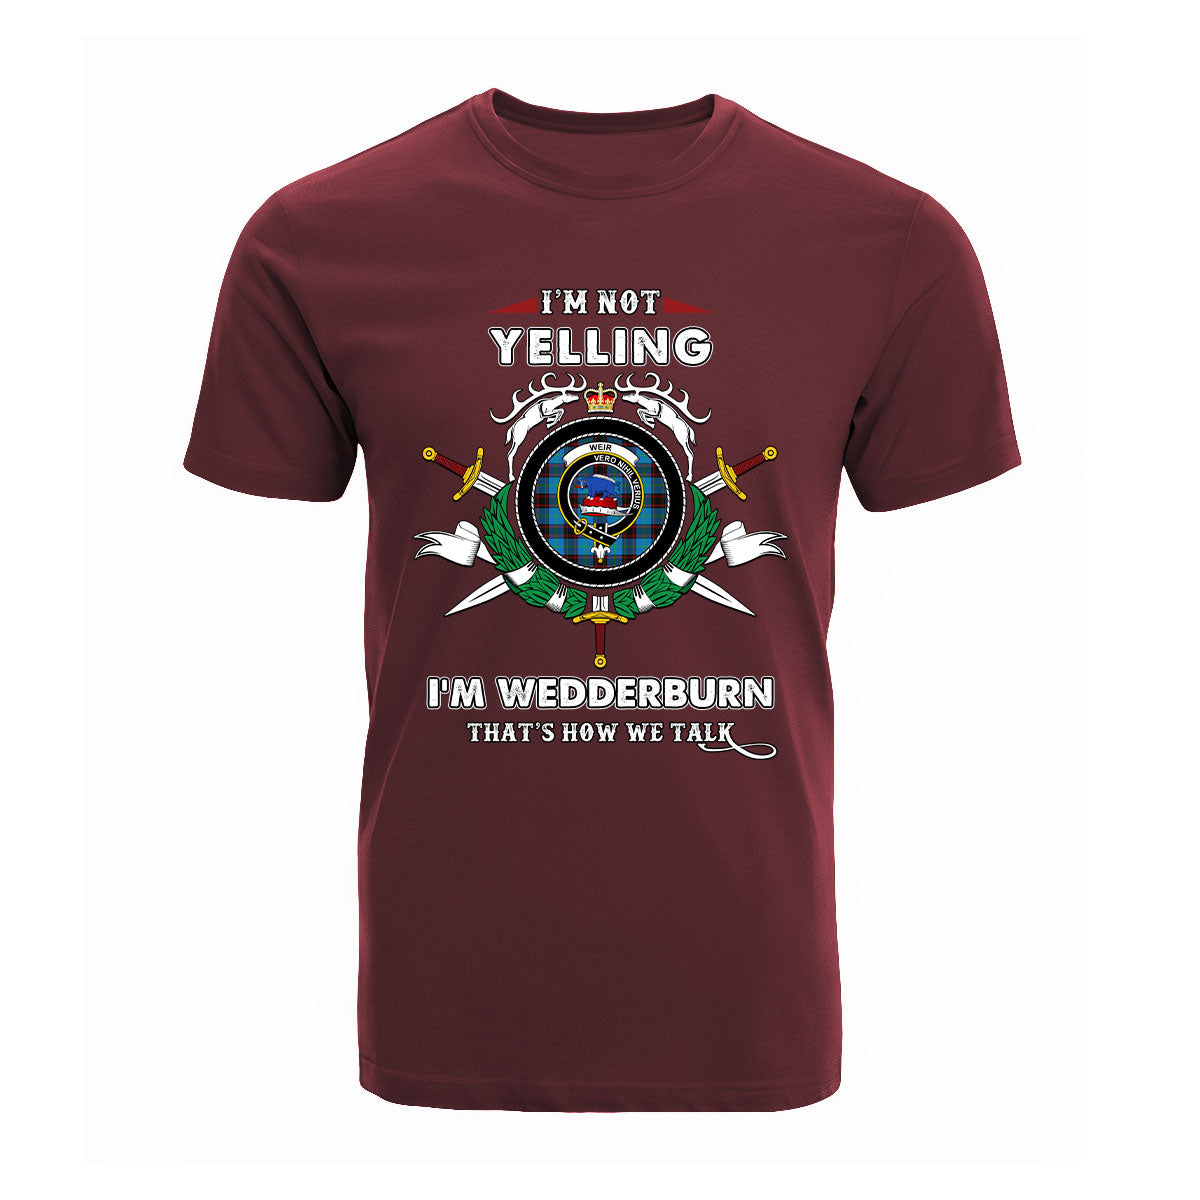 Wedderburn Tartan Crest T-shirt - I'm not yelling style